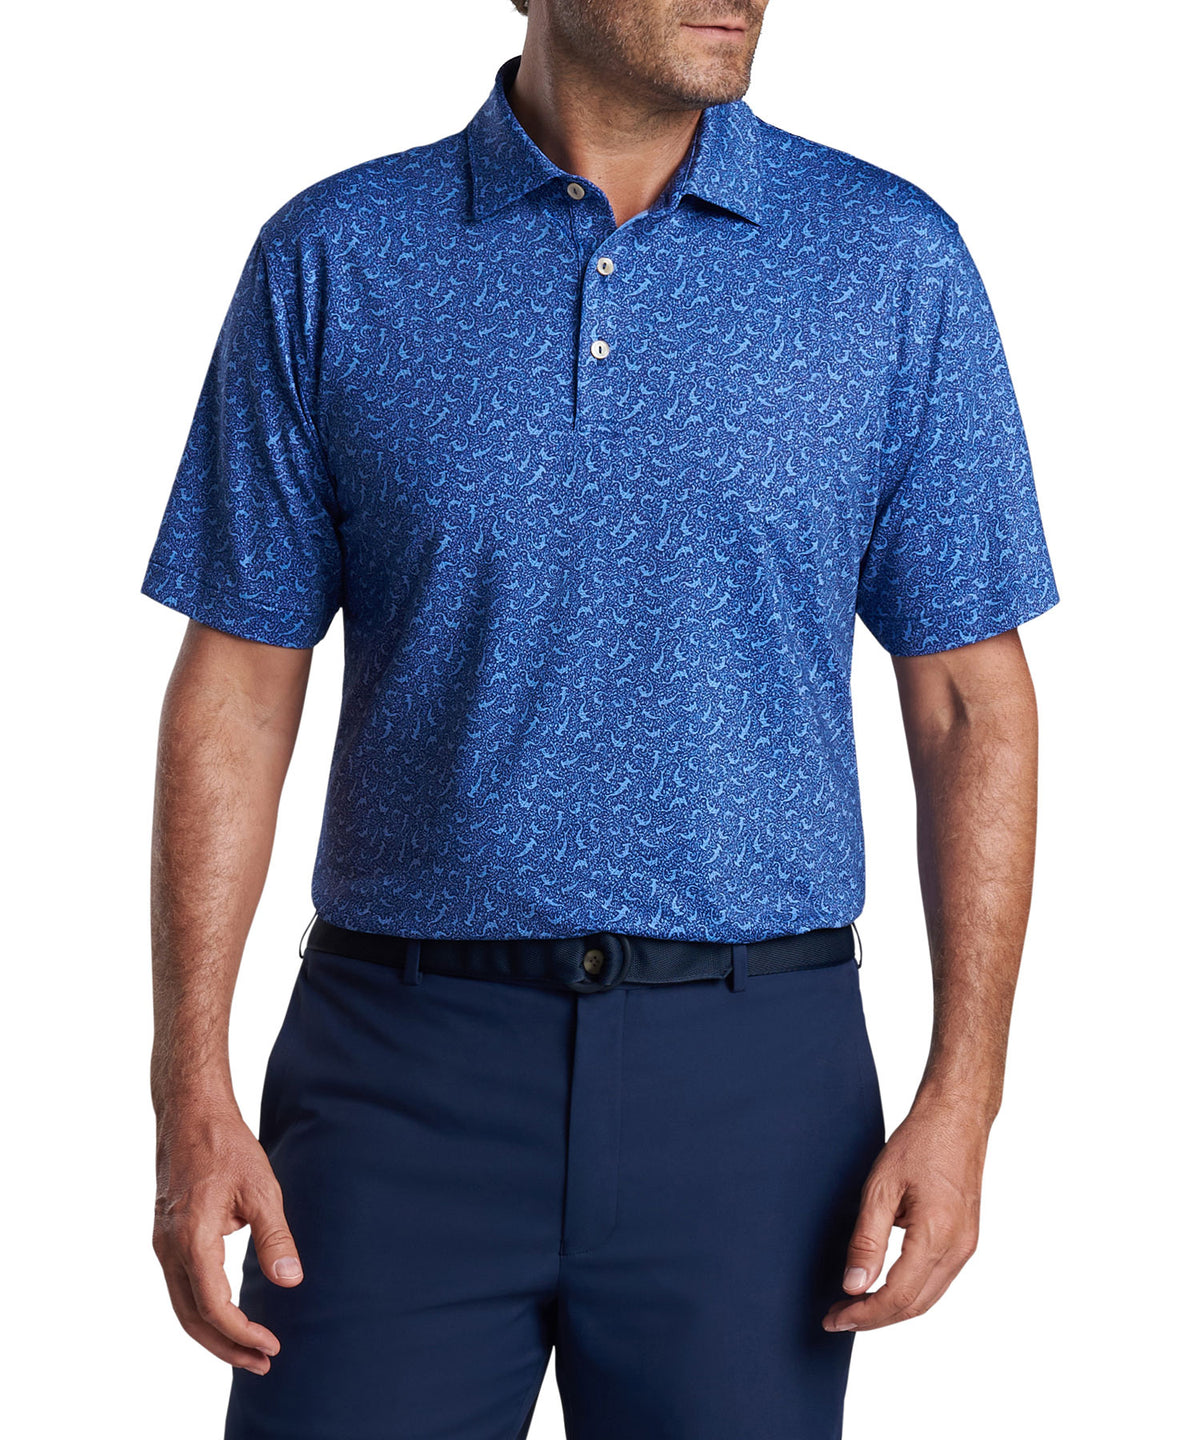 Peter Millar Short Sleeve Hammertime Print Polo Knit Shirt, Big & Tall